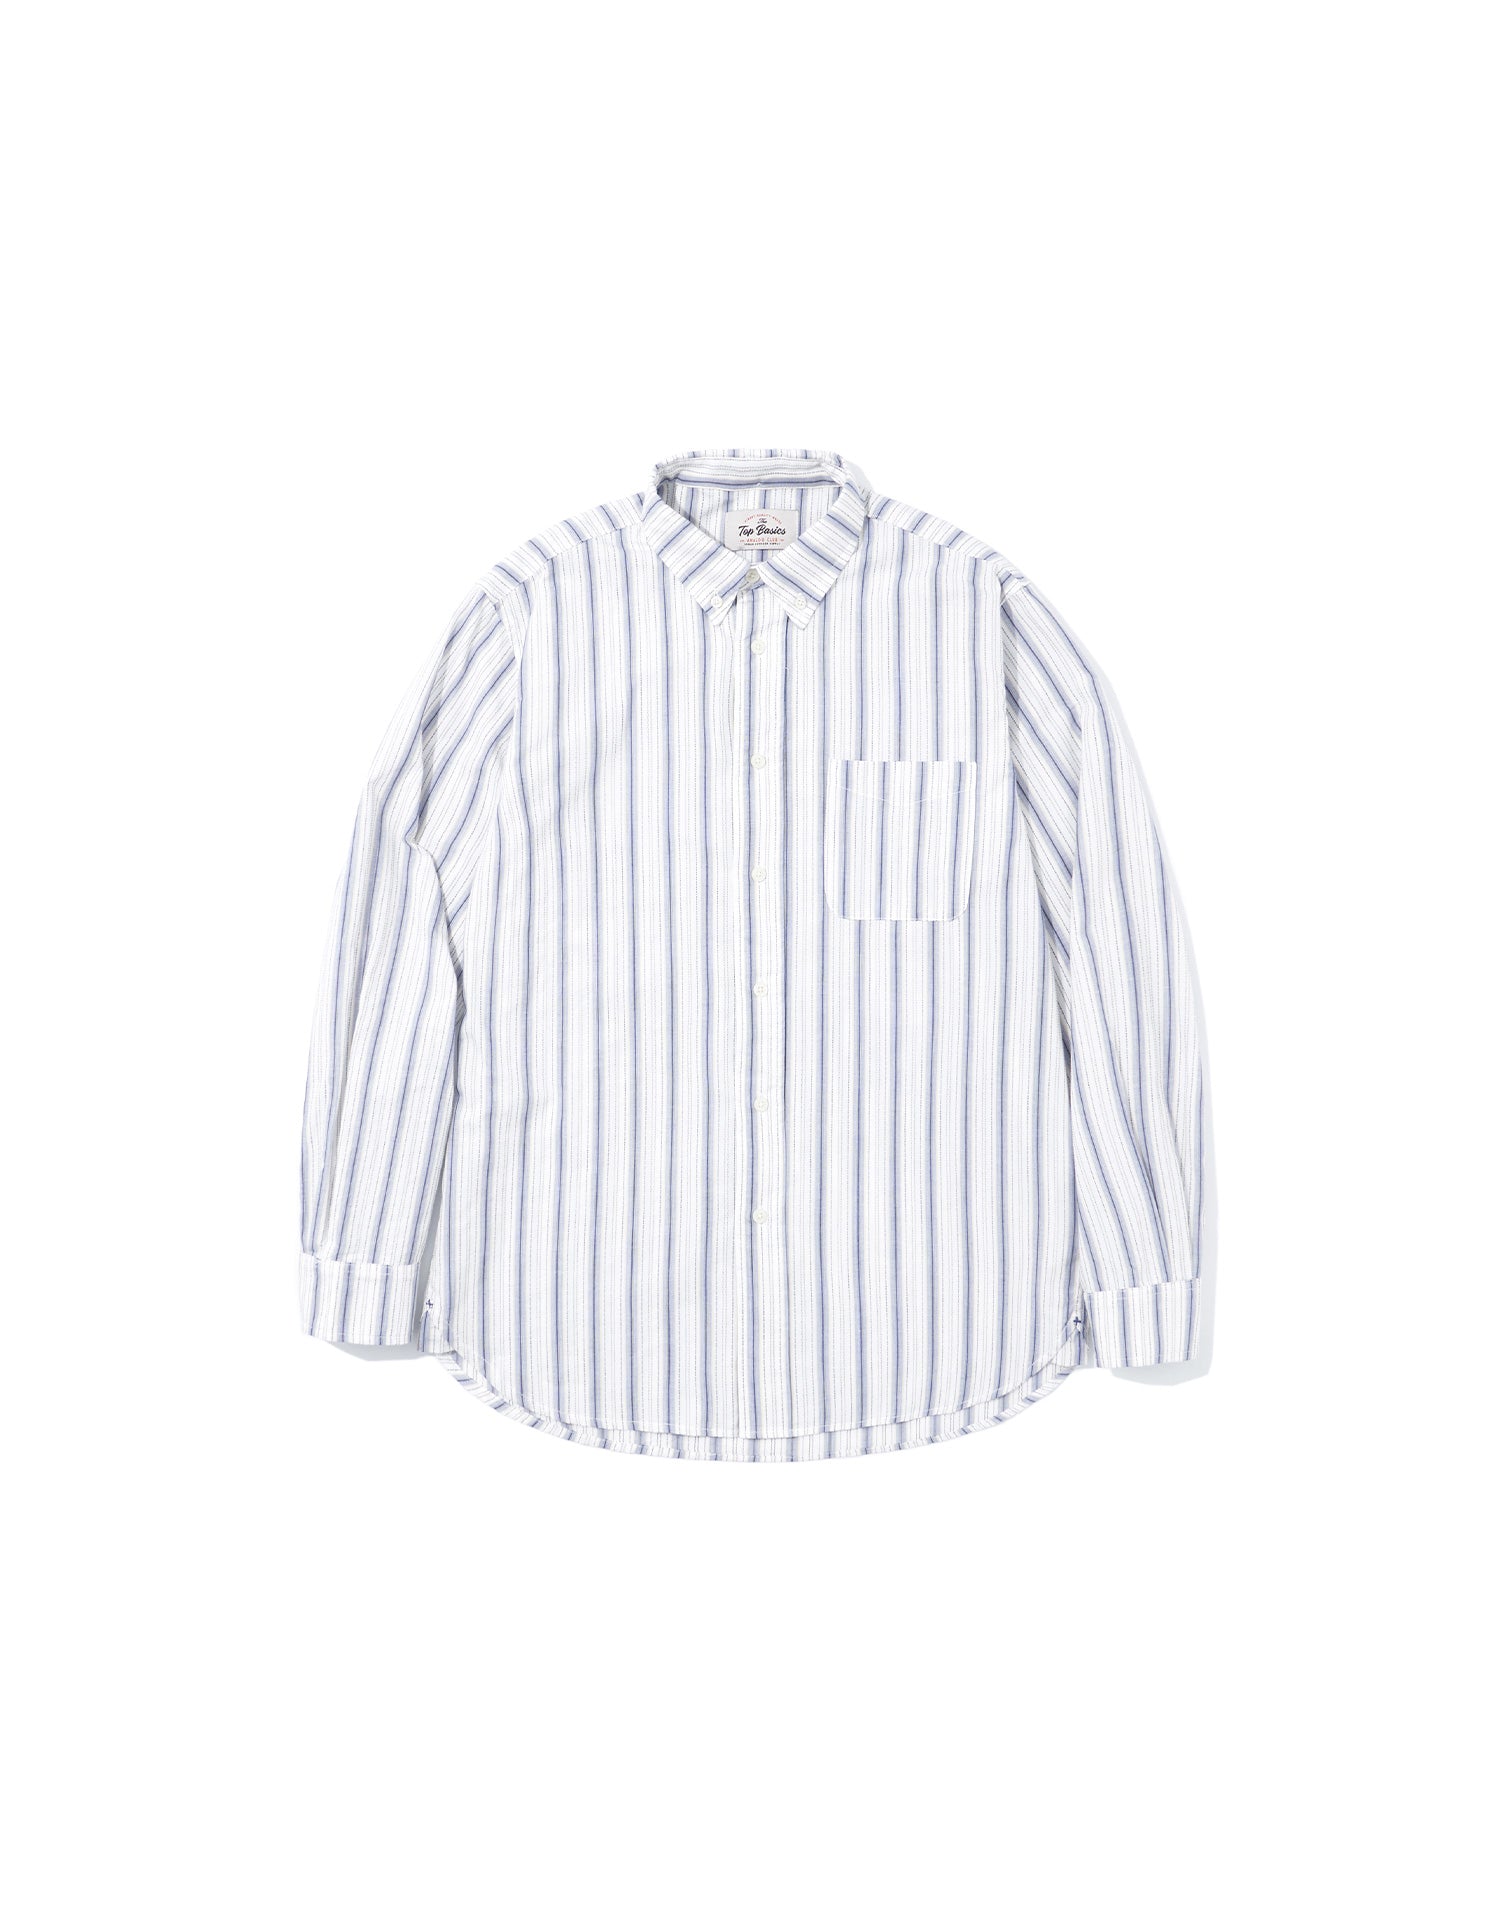 TopBasics Striped Cotton Shirt